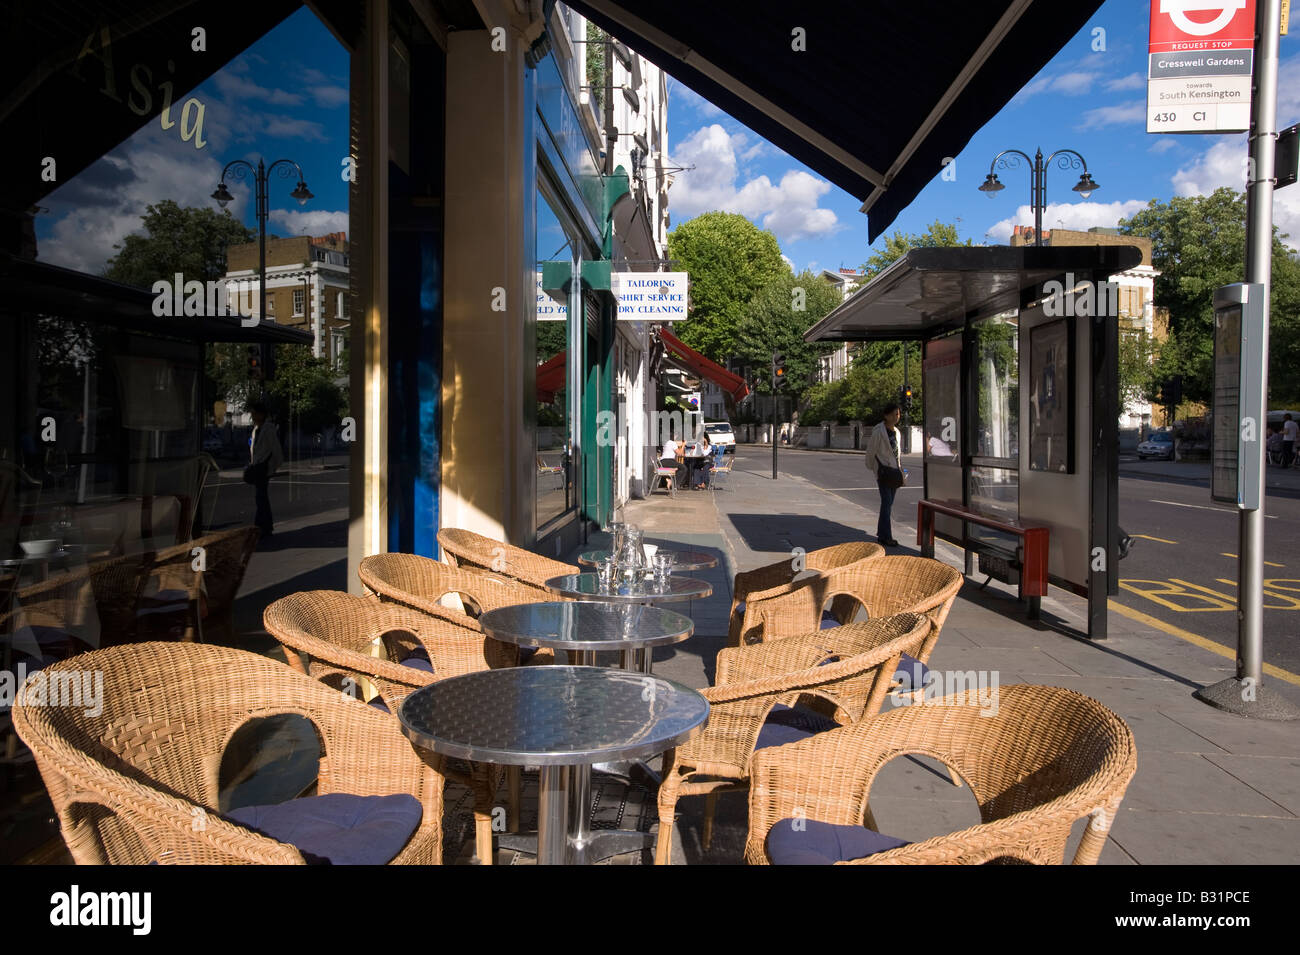 Sidewalk cafe in Kensington SW7 London United Kingdom Stock Photo